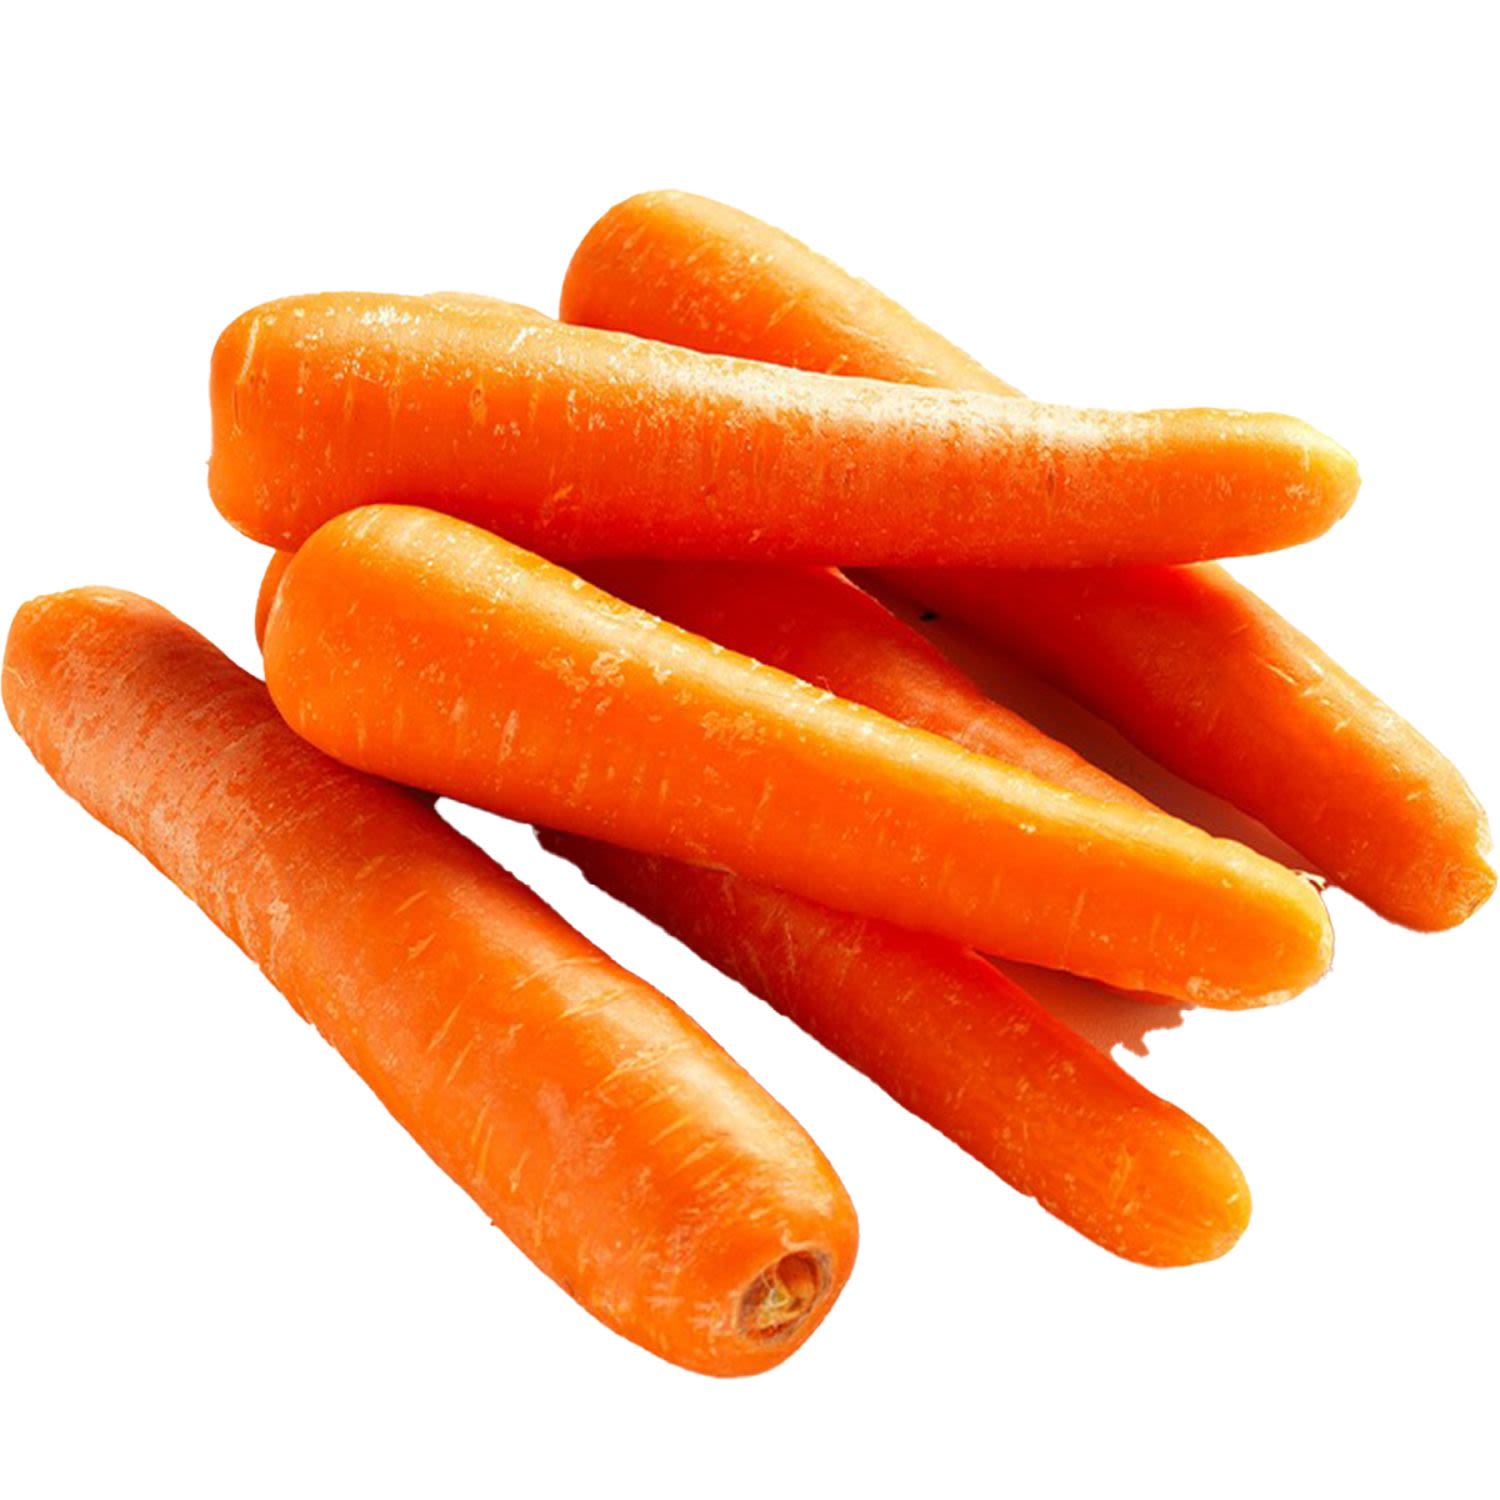 Carrots Prepack 1kg, 1 Each